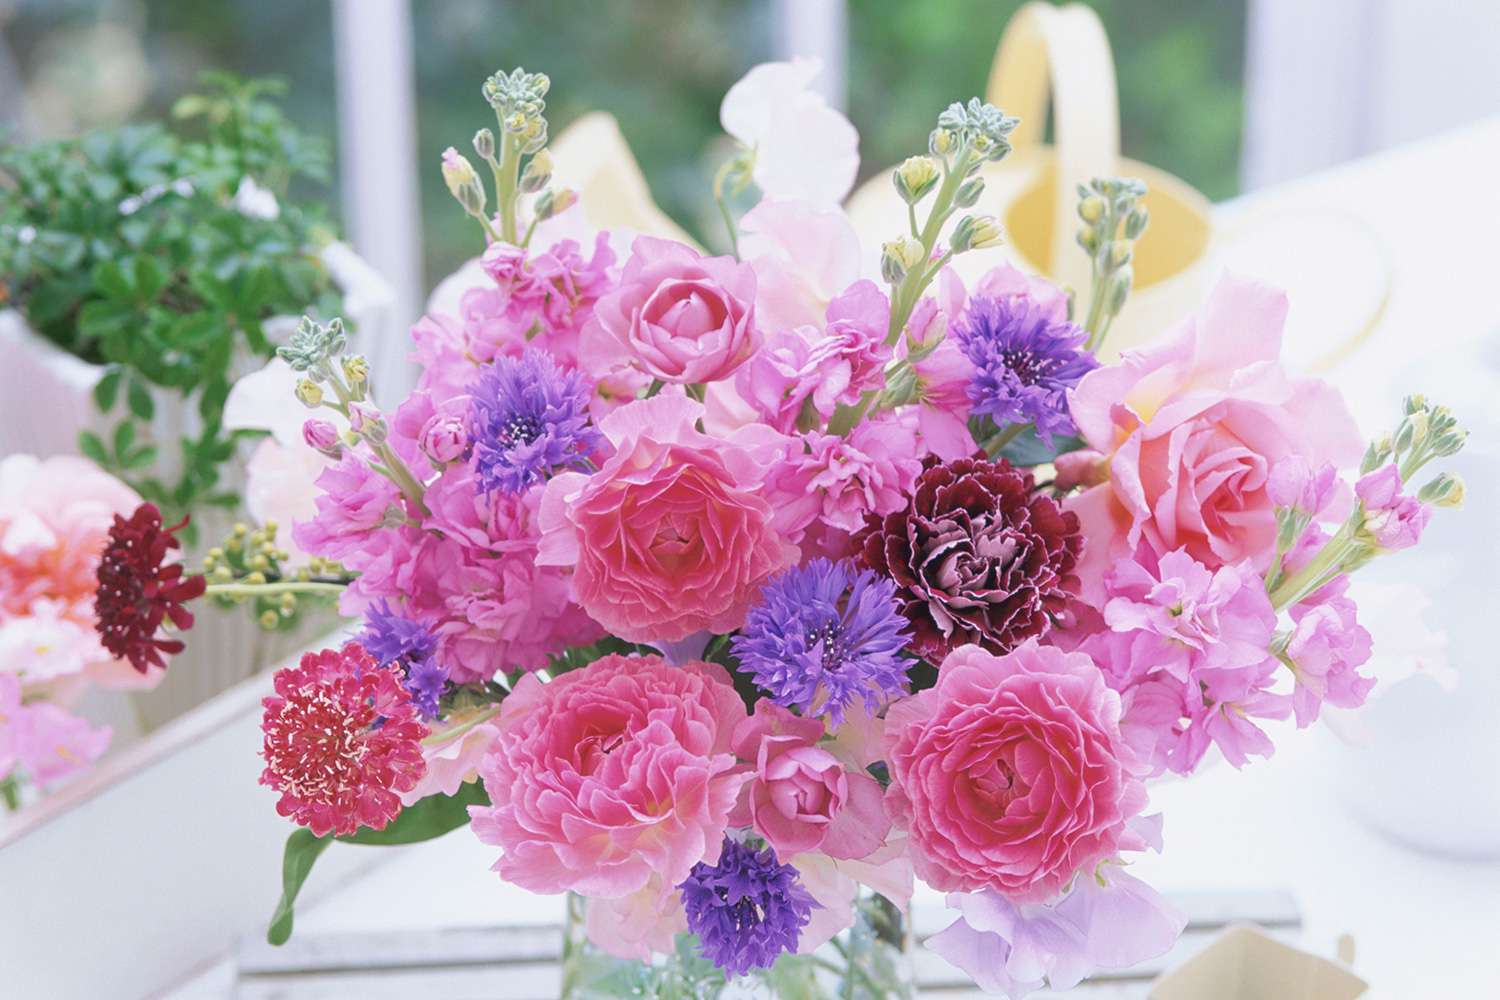 Popular Flower Arrangements for Festive Occasions